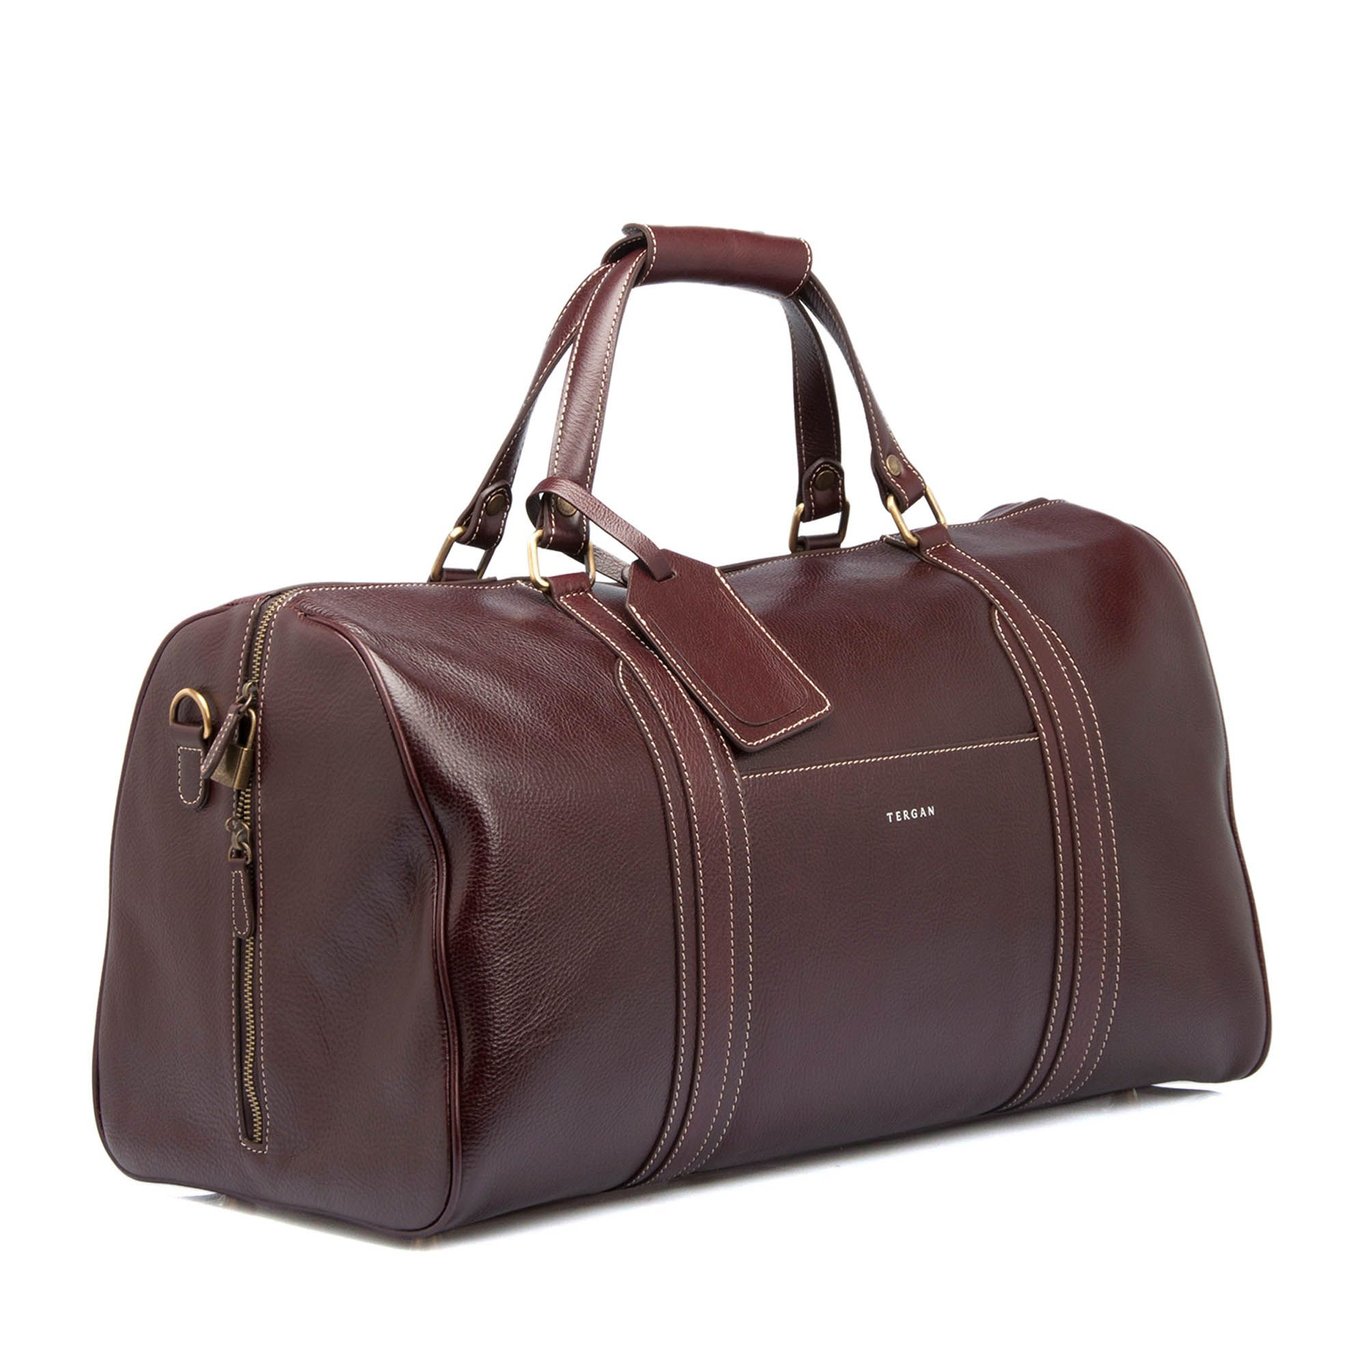 Tergan Leather Travel Bag